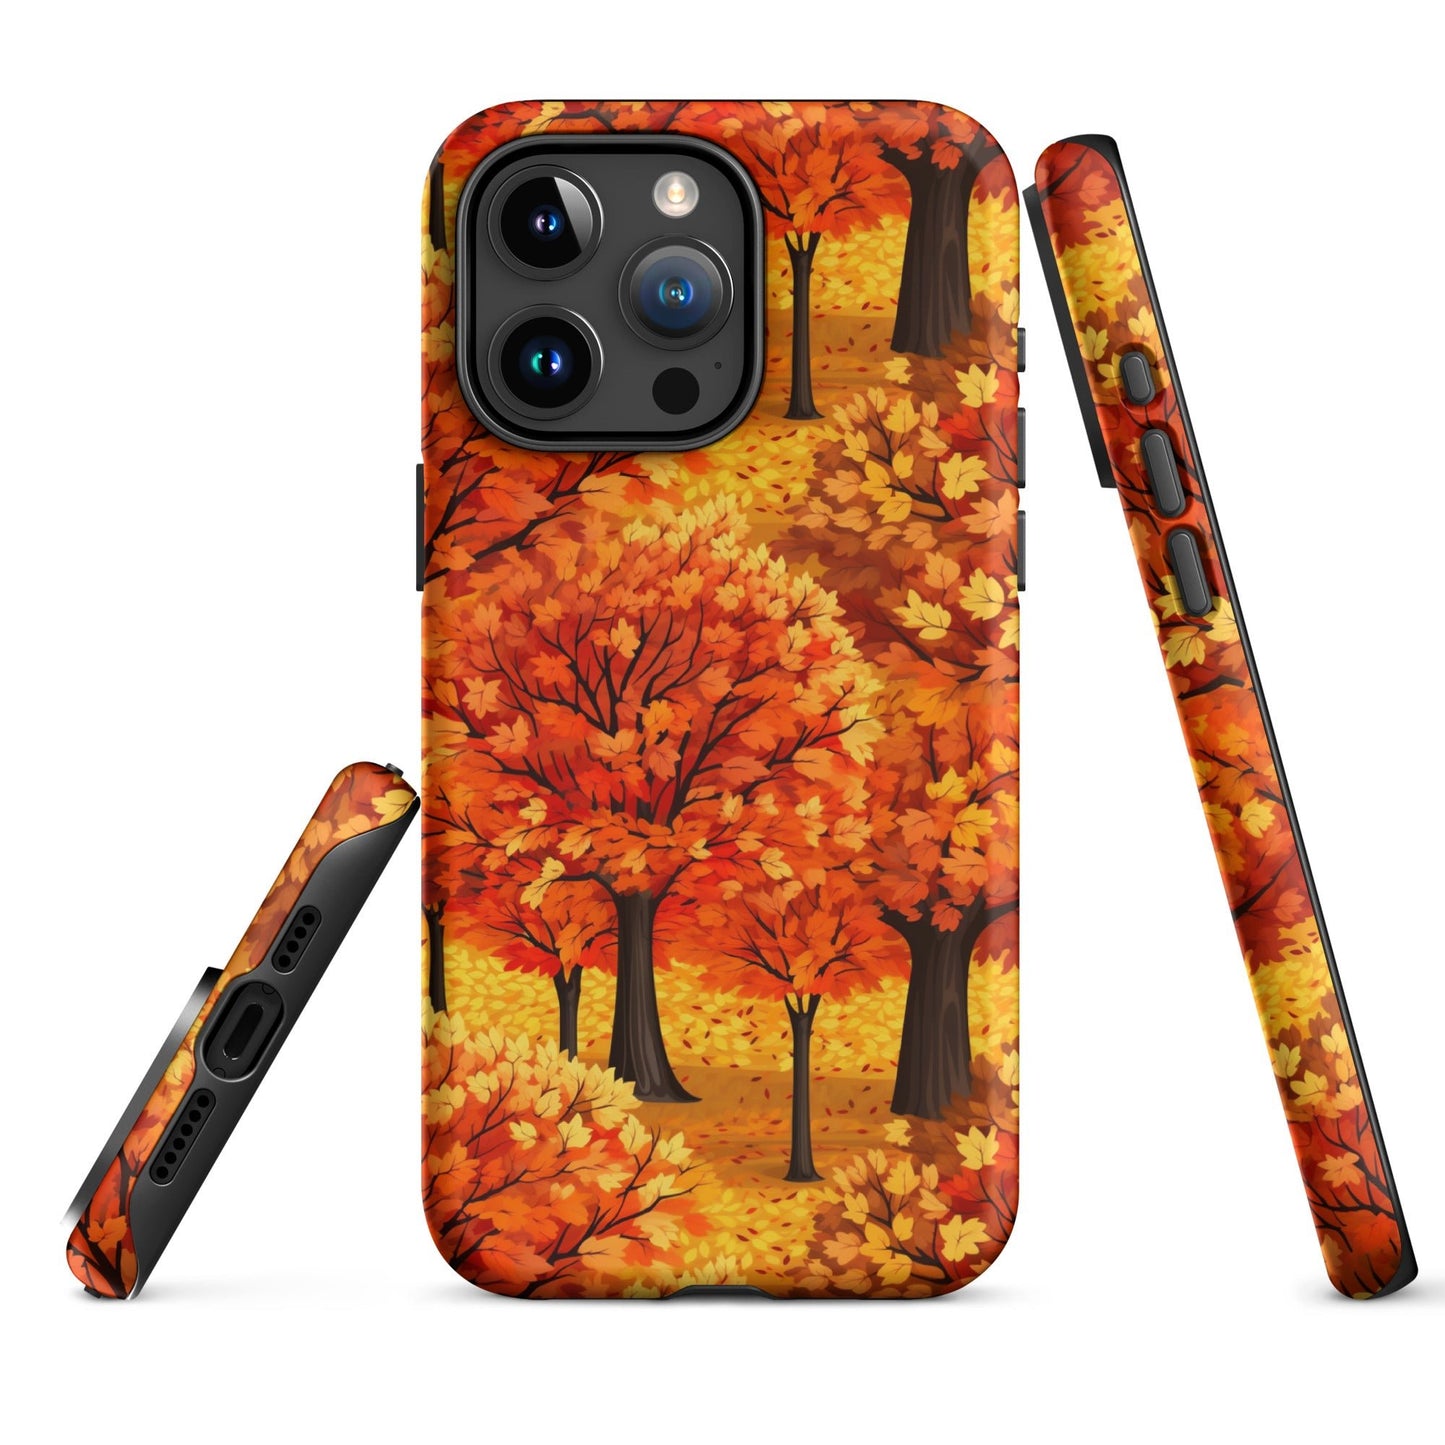 Impasto-Style Woodlands - High-Contrast Autumn Foliage - iPhone Case - Pattern Symphony